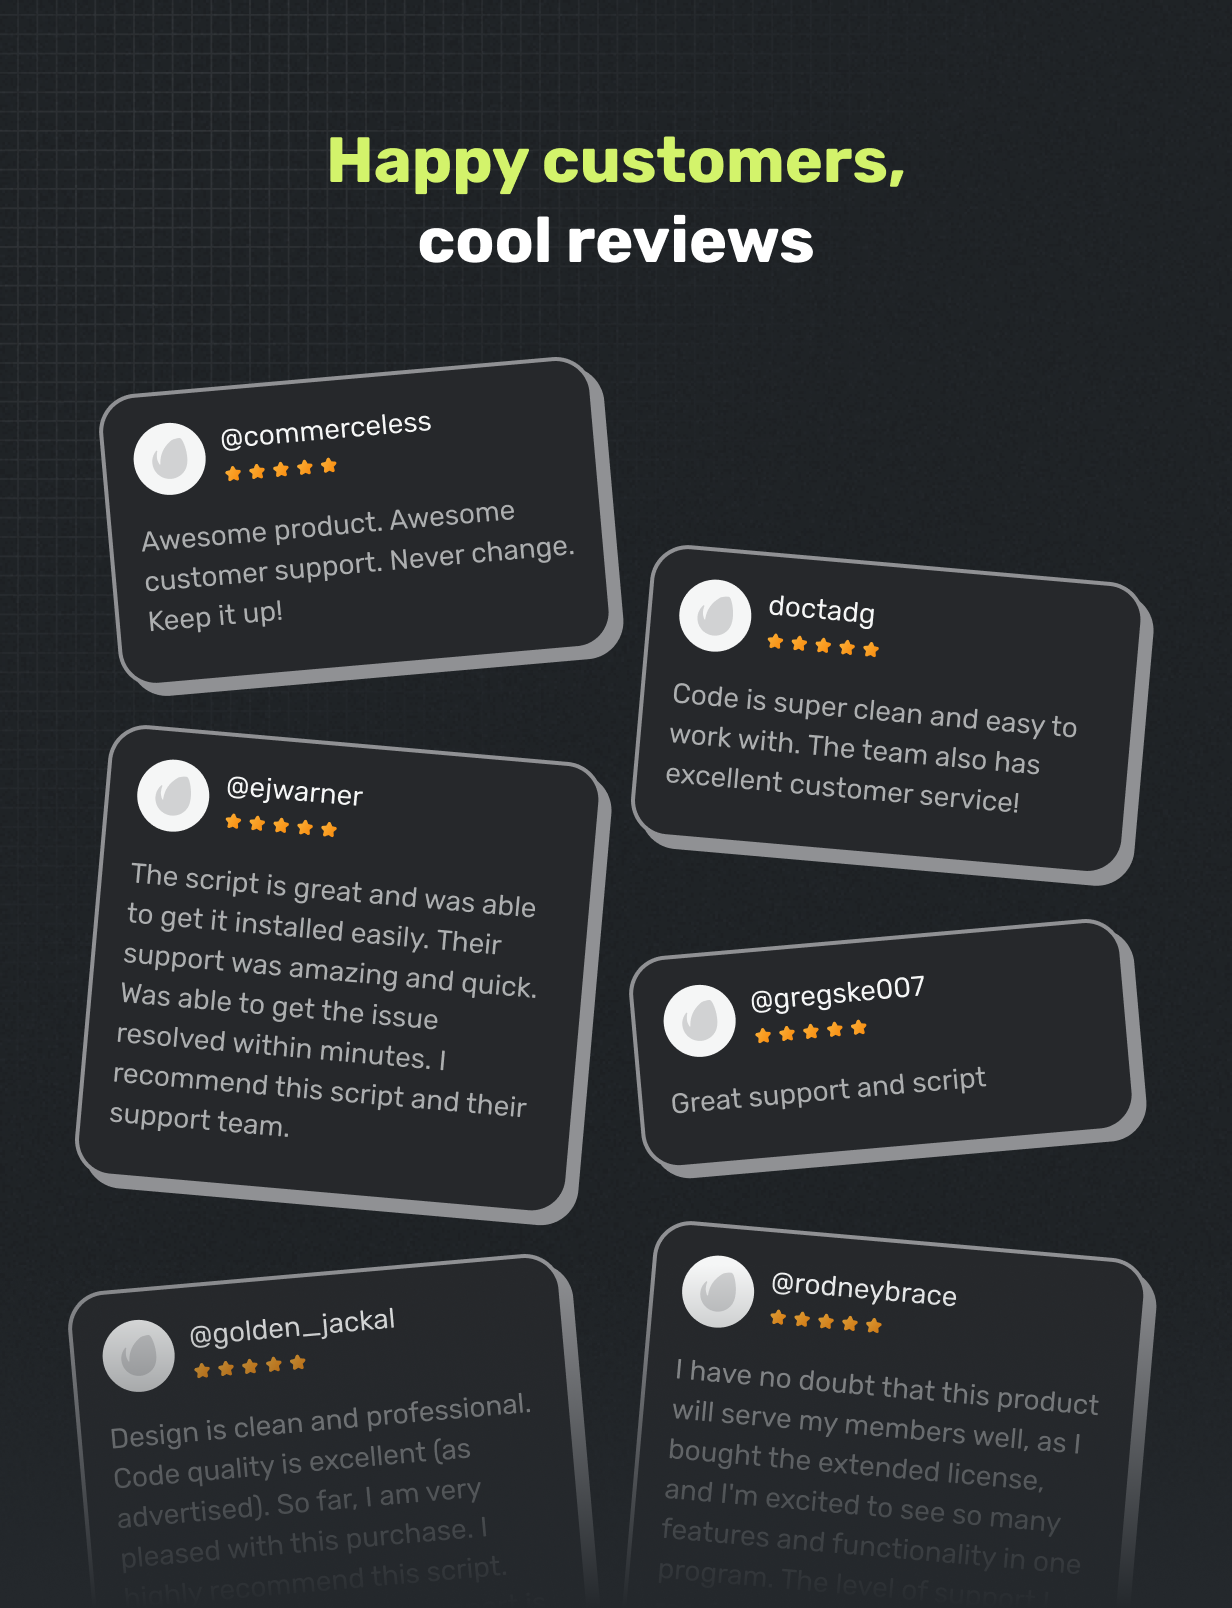 Happy customers, Cool reviews, Rate us, Give feedback aikeedo @heyaikeedo